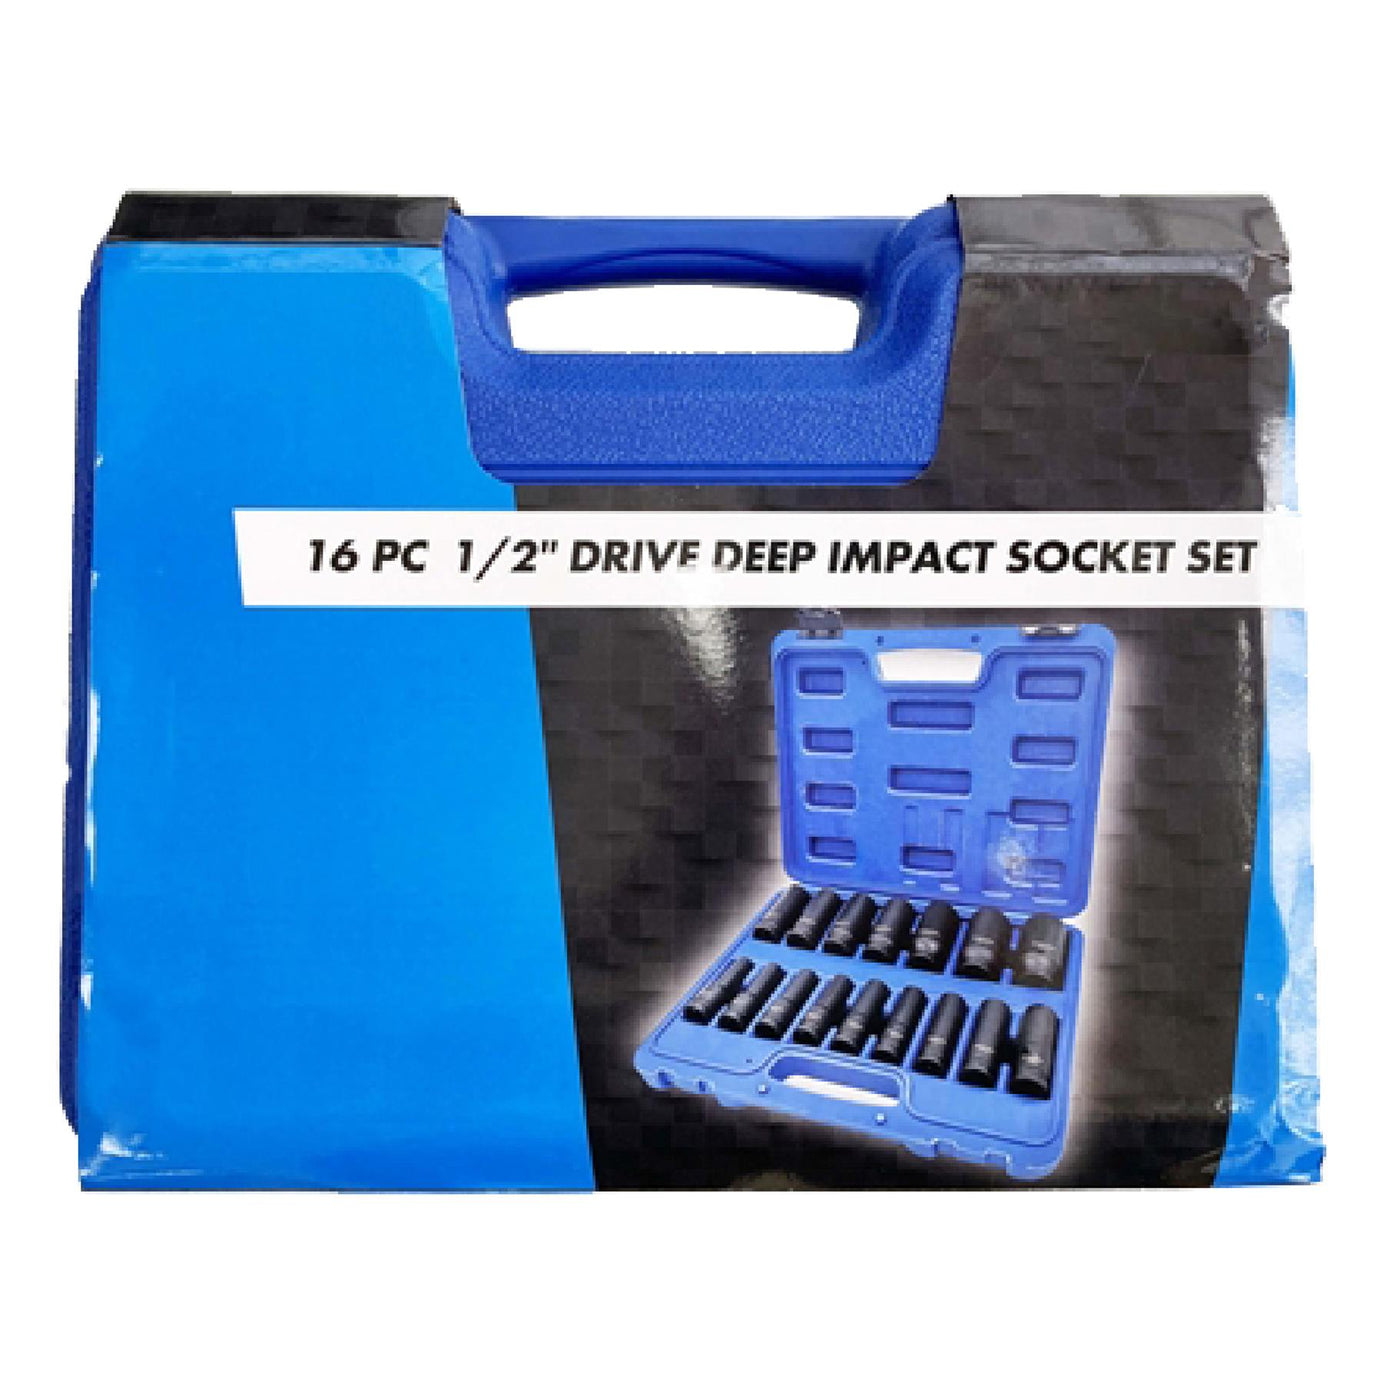 Deep Impact Socket Set 1/2" Drive Heavy Duty 16 Piece 10 - 32mm Metric